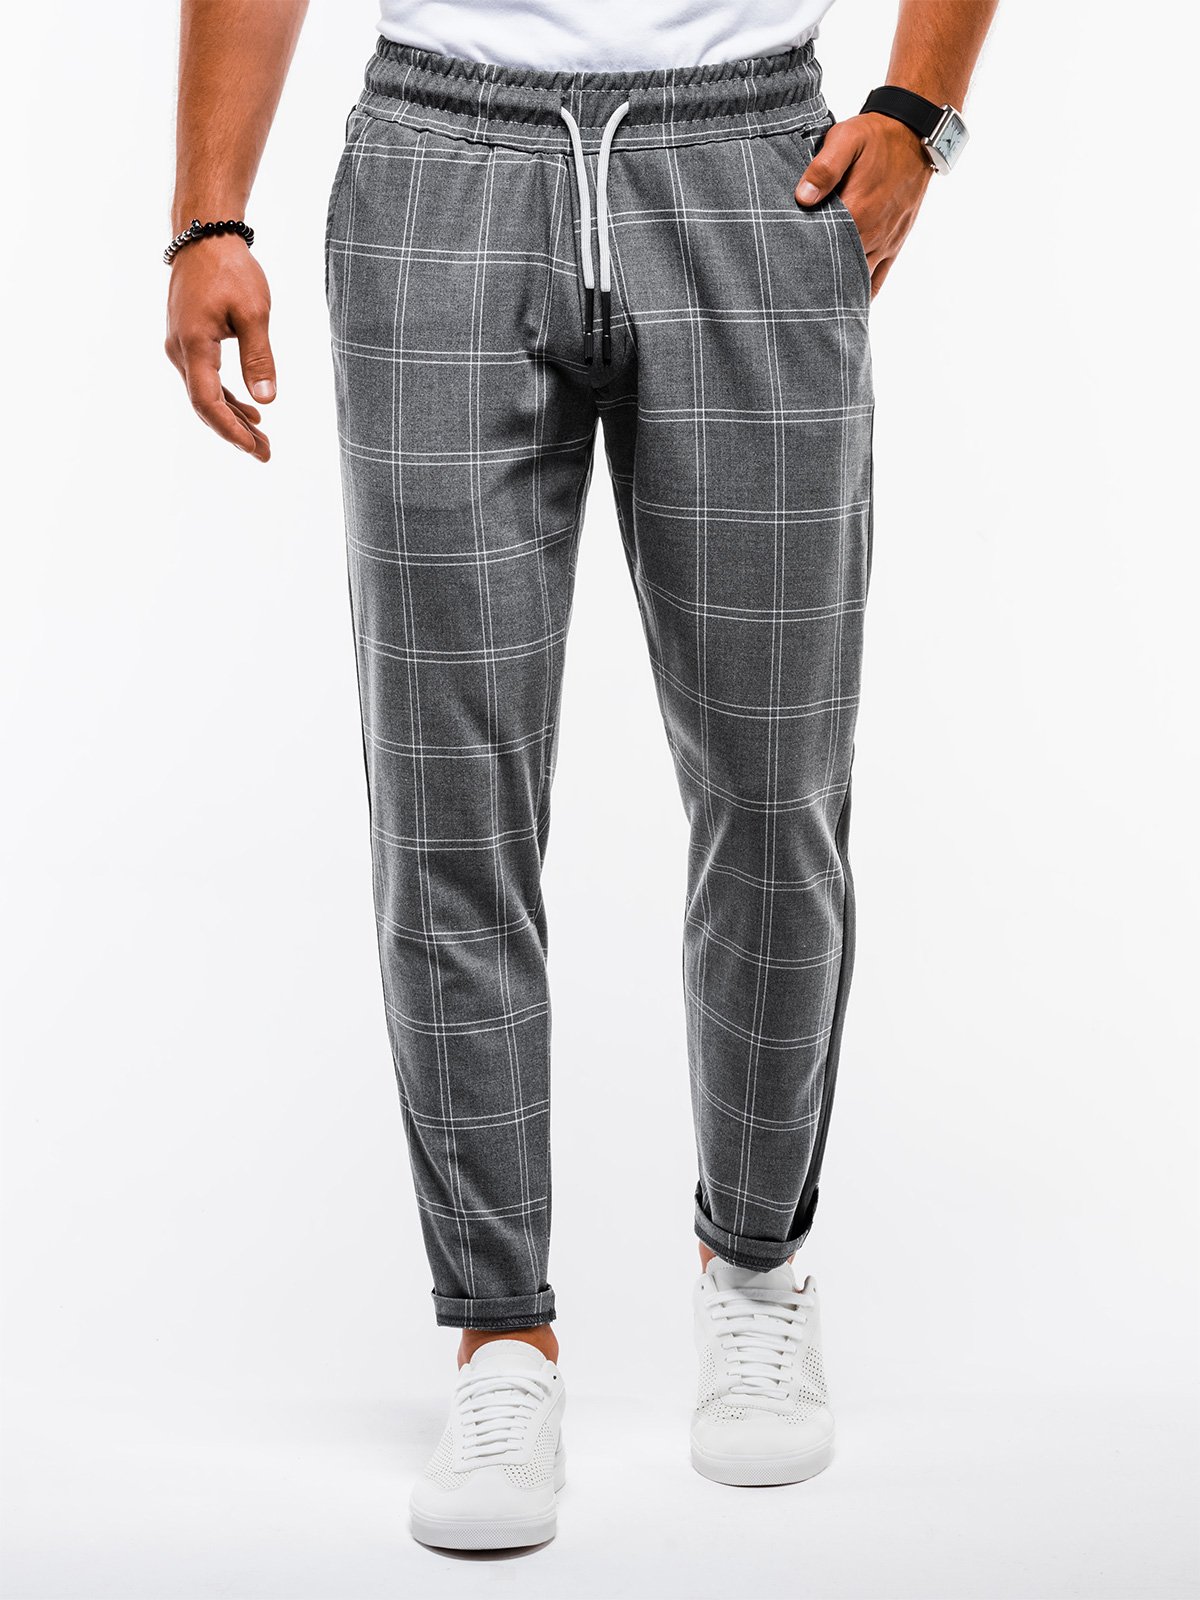 Men's pants chinos P851 - dark grey | MODONE wholesale - Clothing For Men